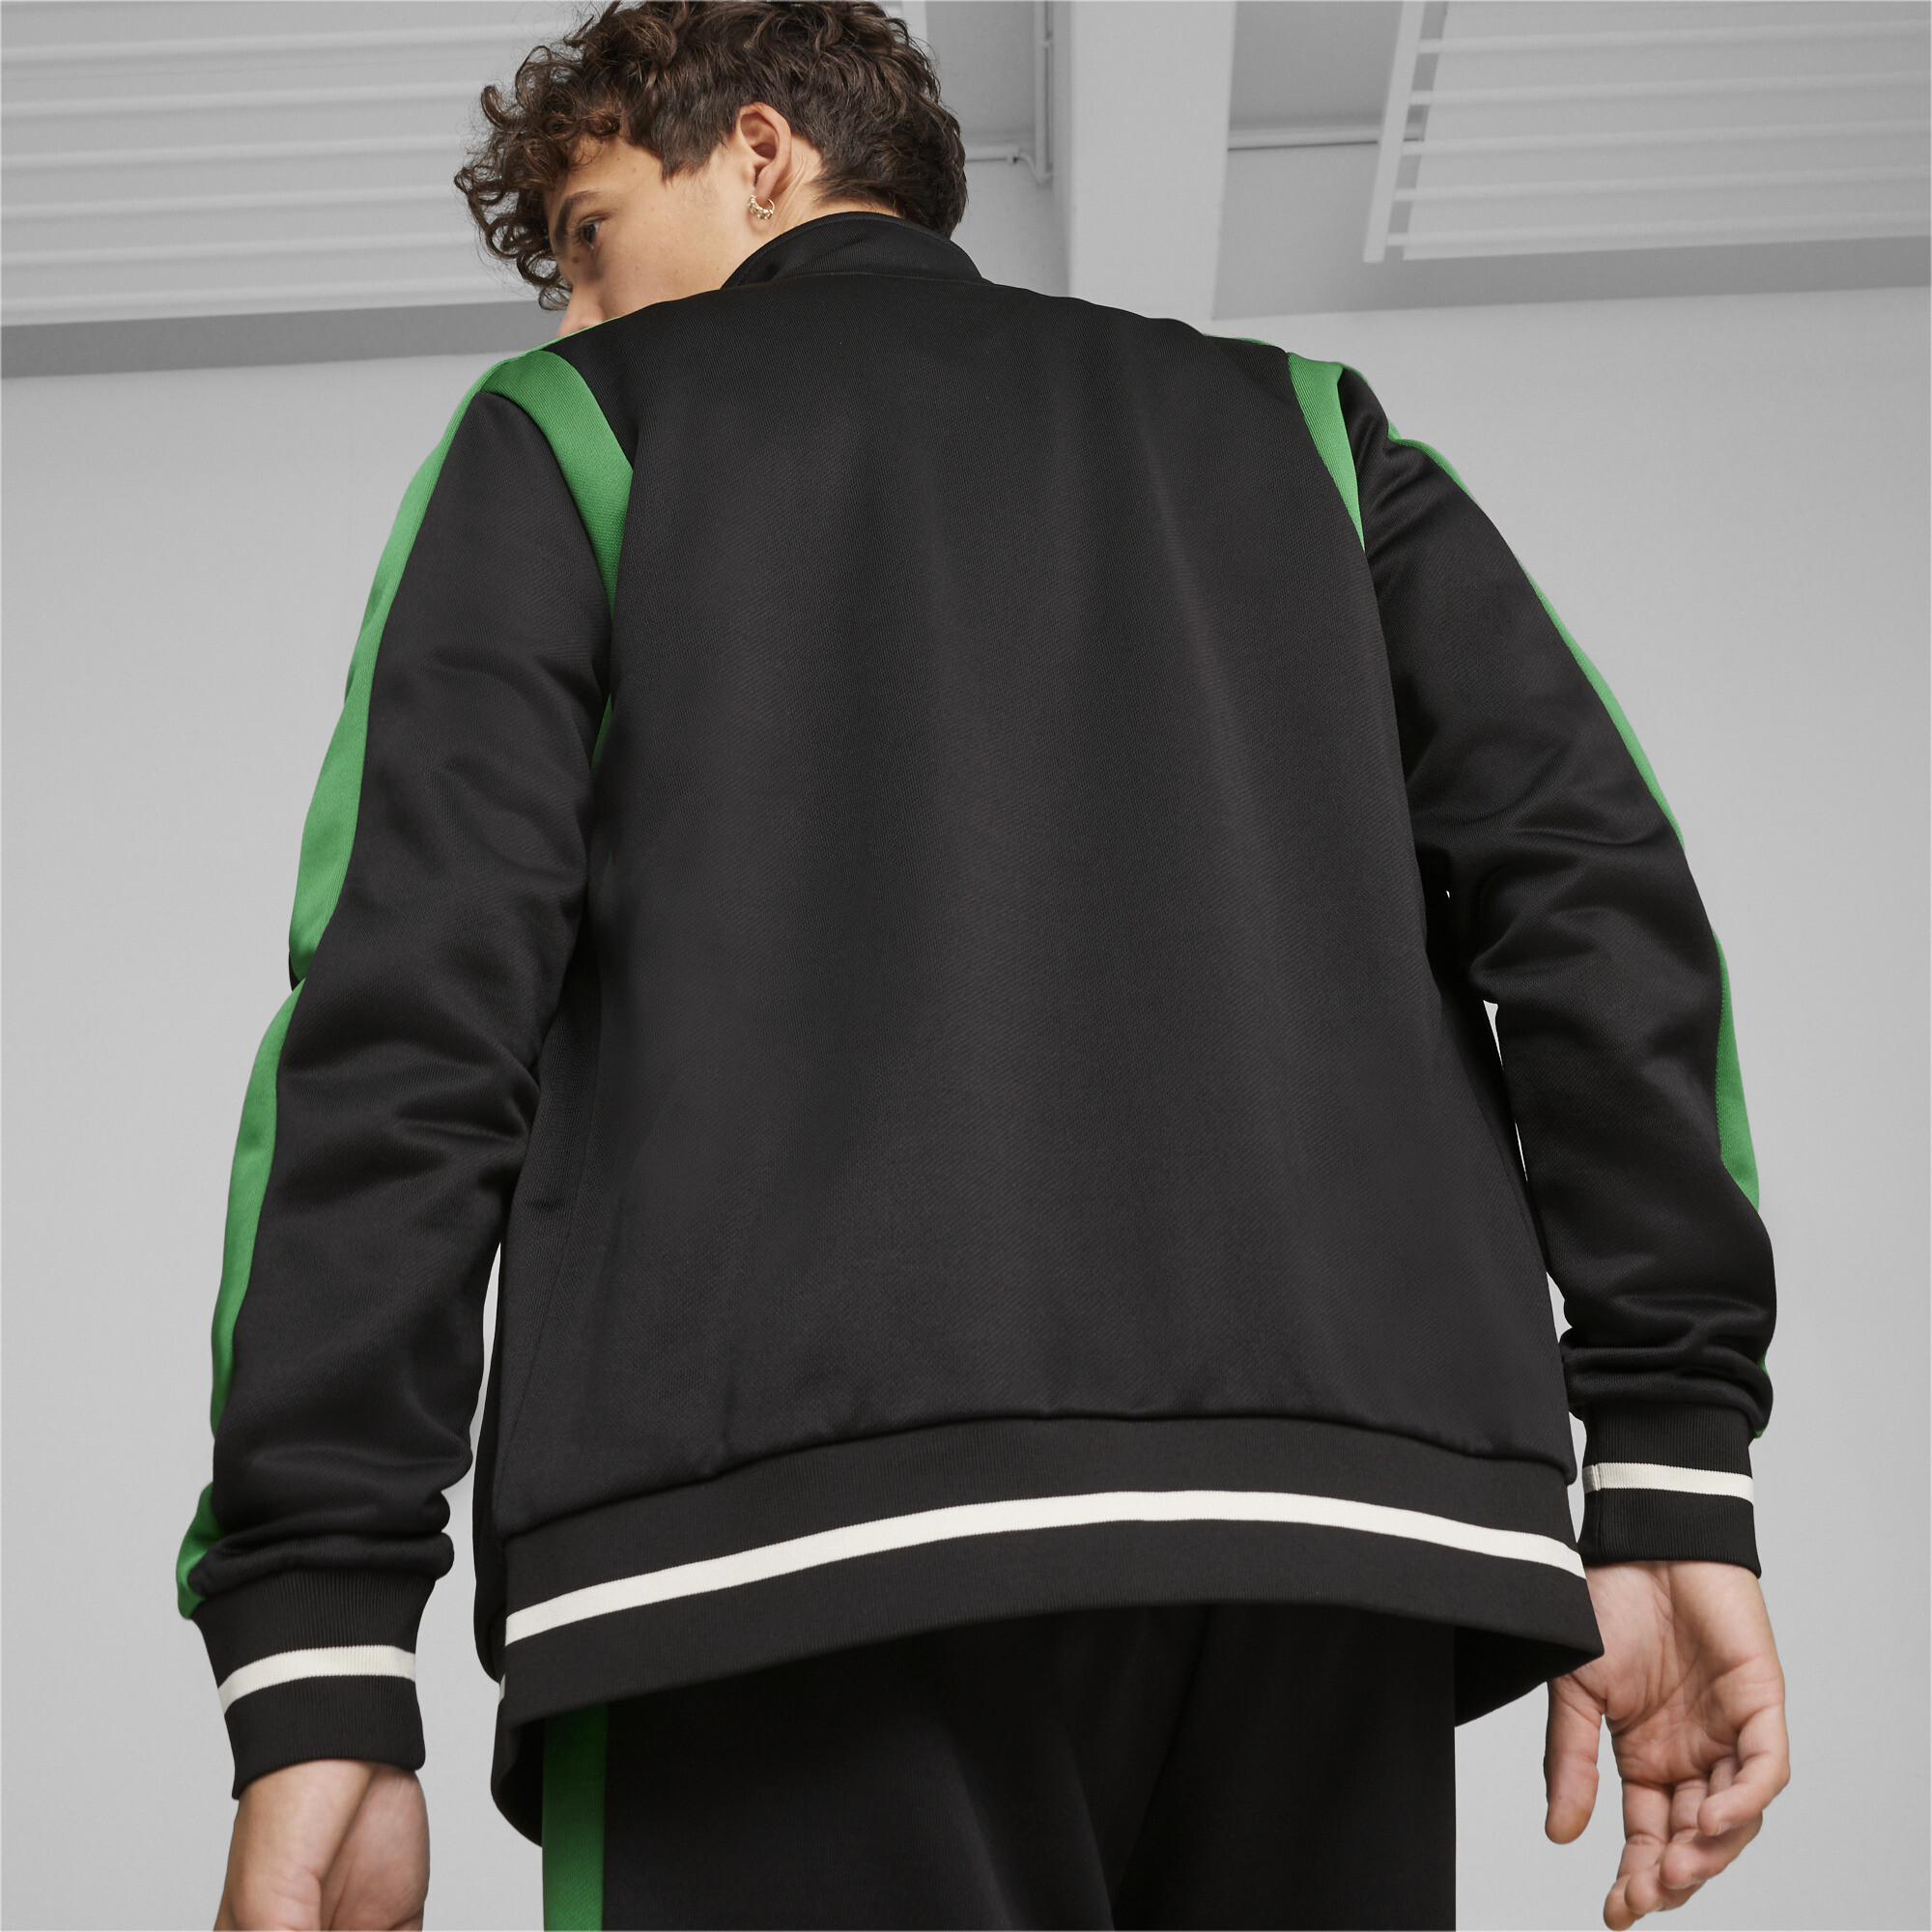 Men's Puma T7's Track Jacket, Black, Size L, Clothing